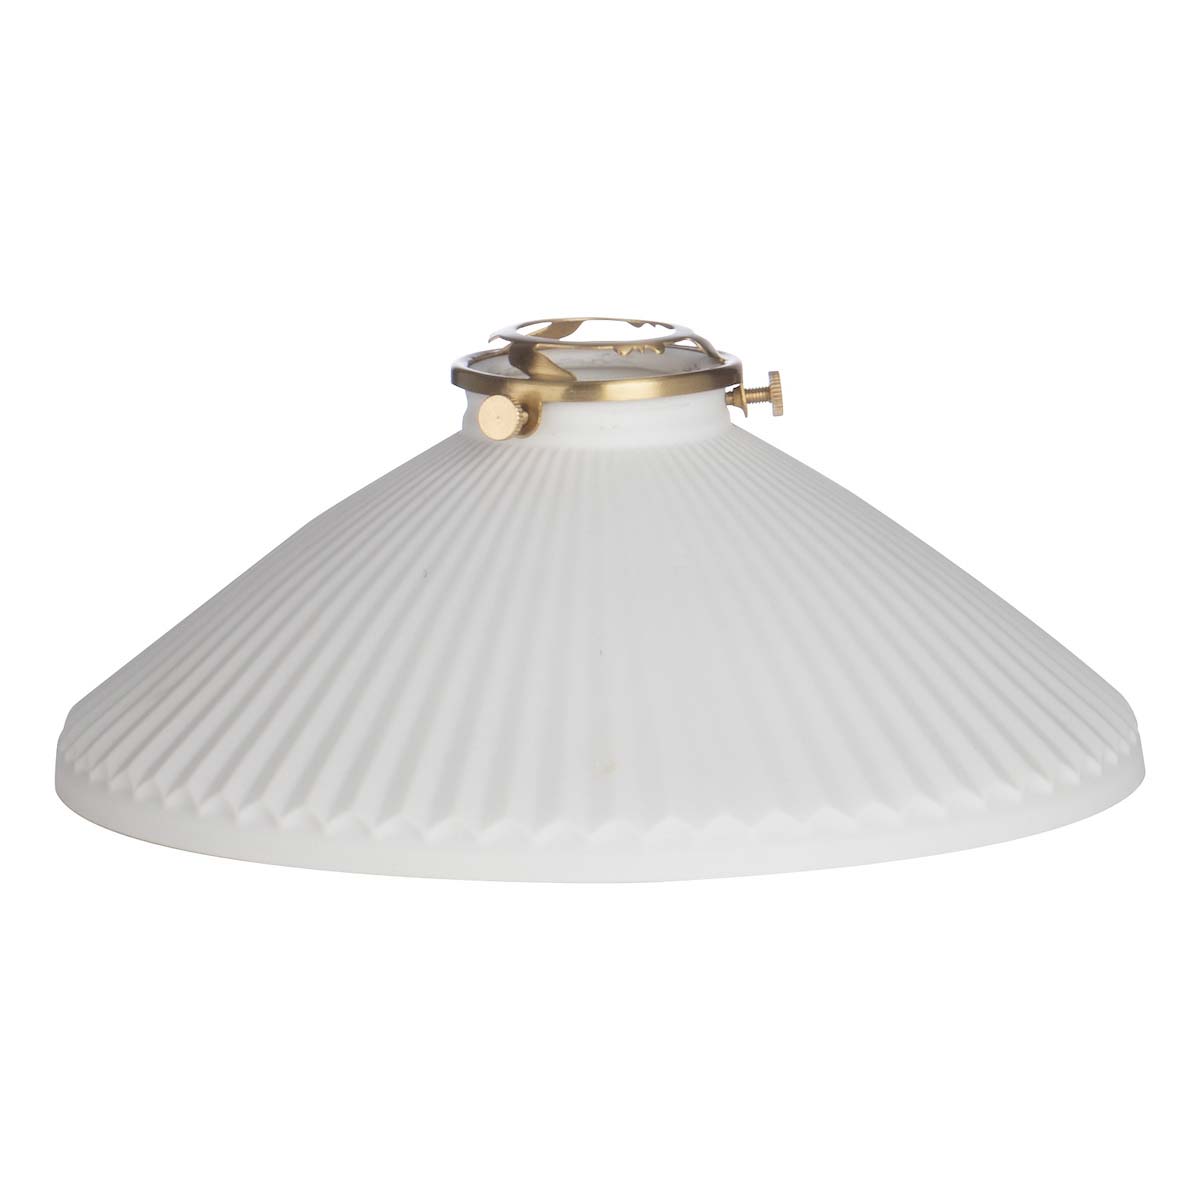 Dar Hadano Easy Fit White Ceramic Coolie Lamp Shade E14